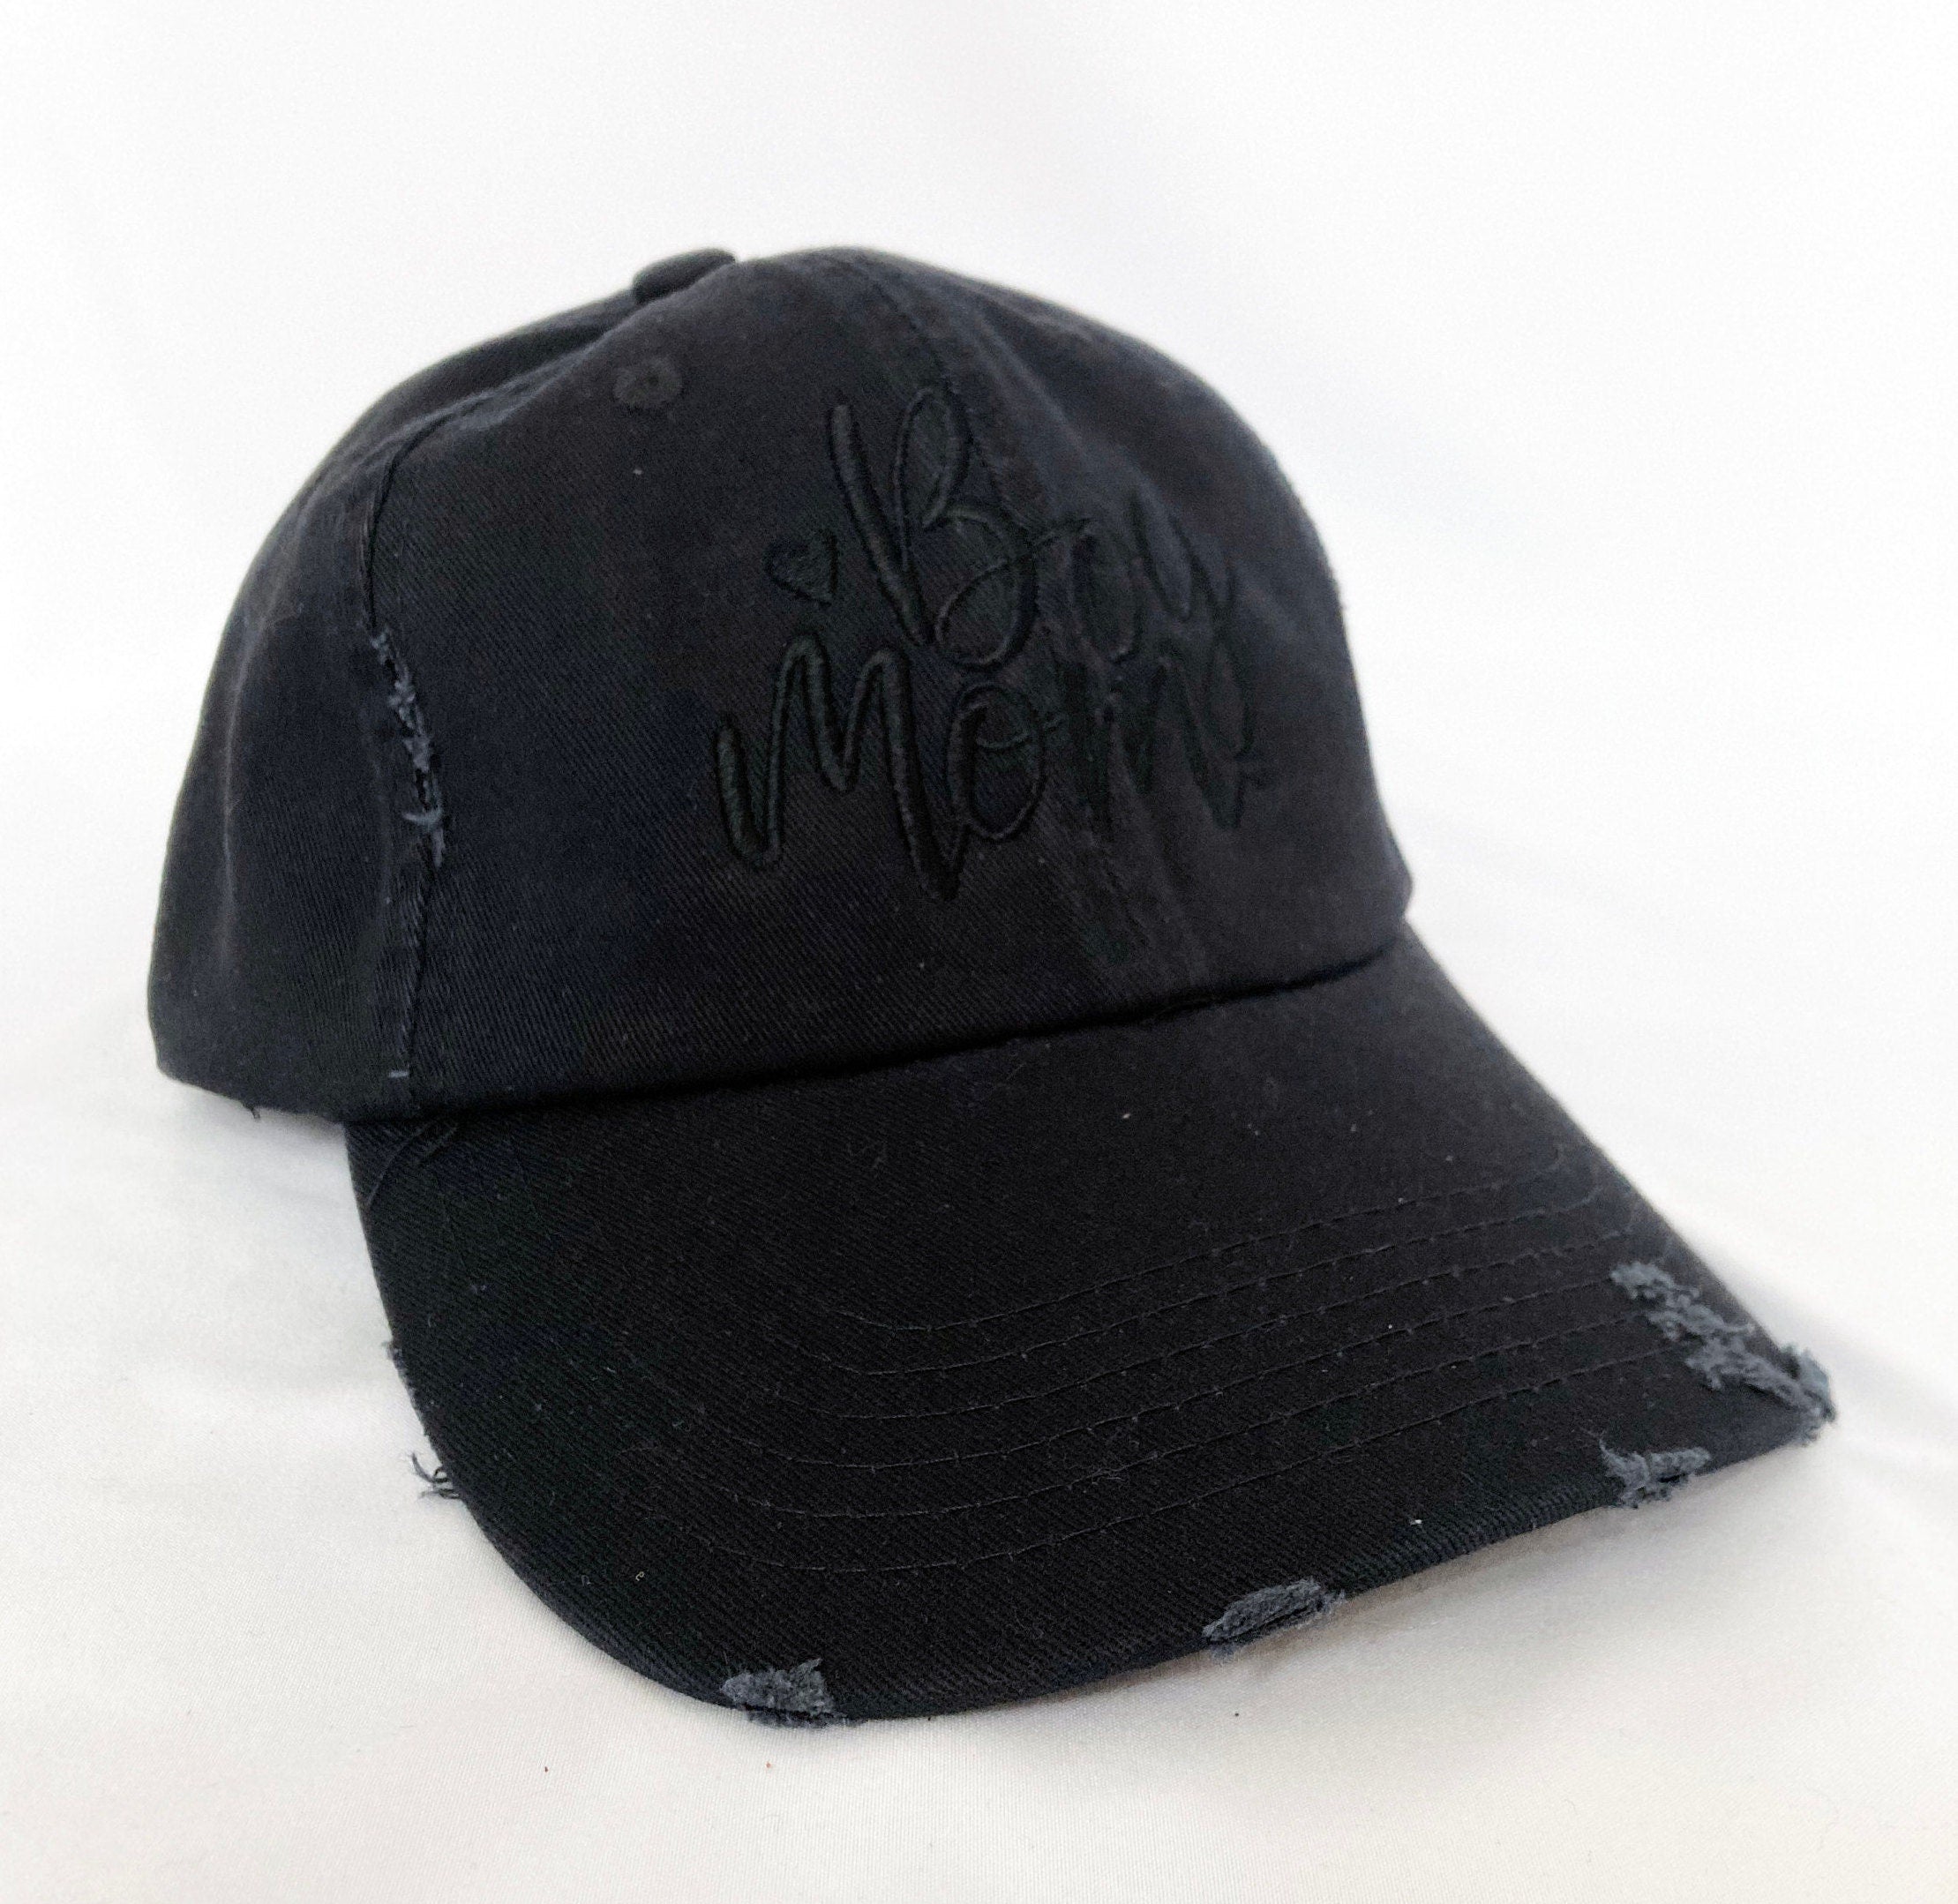 Boymom® Distressed Black Cap